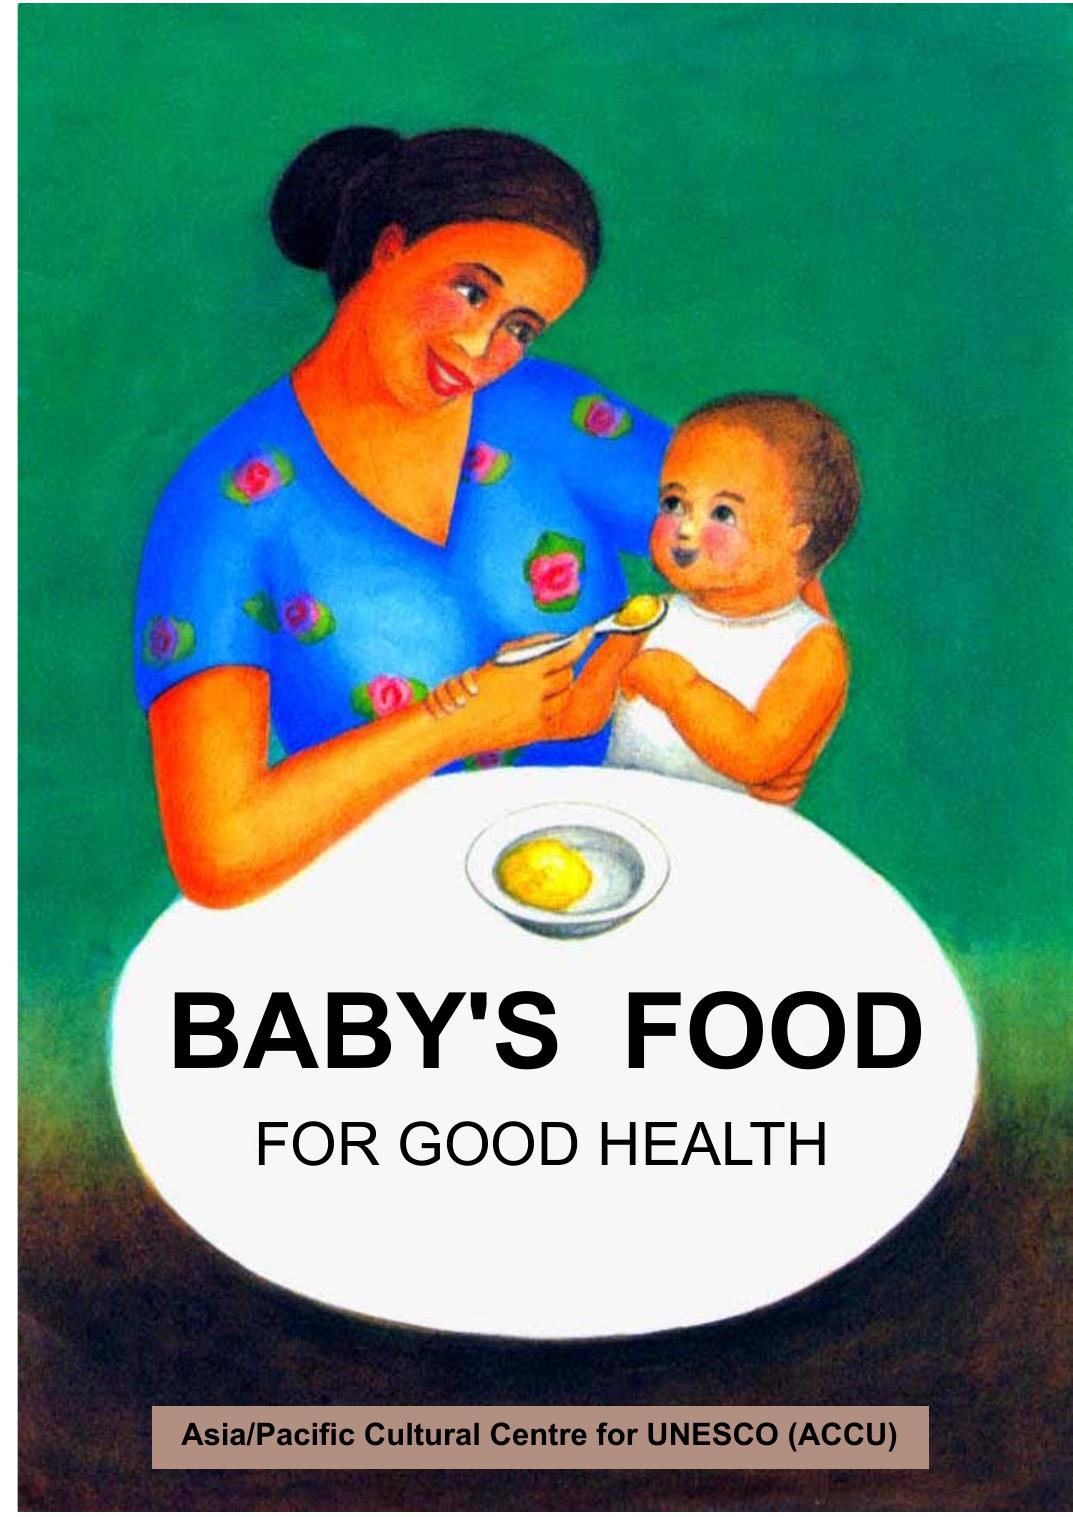 Babys Food: Good For Health